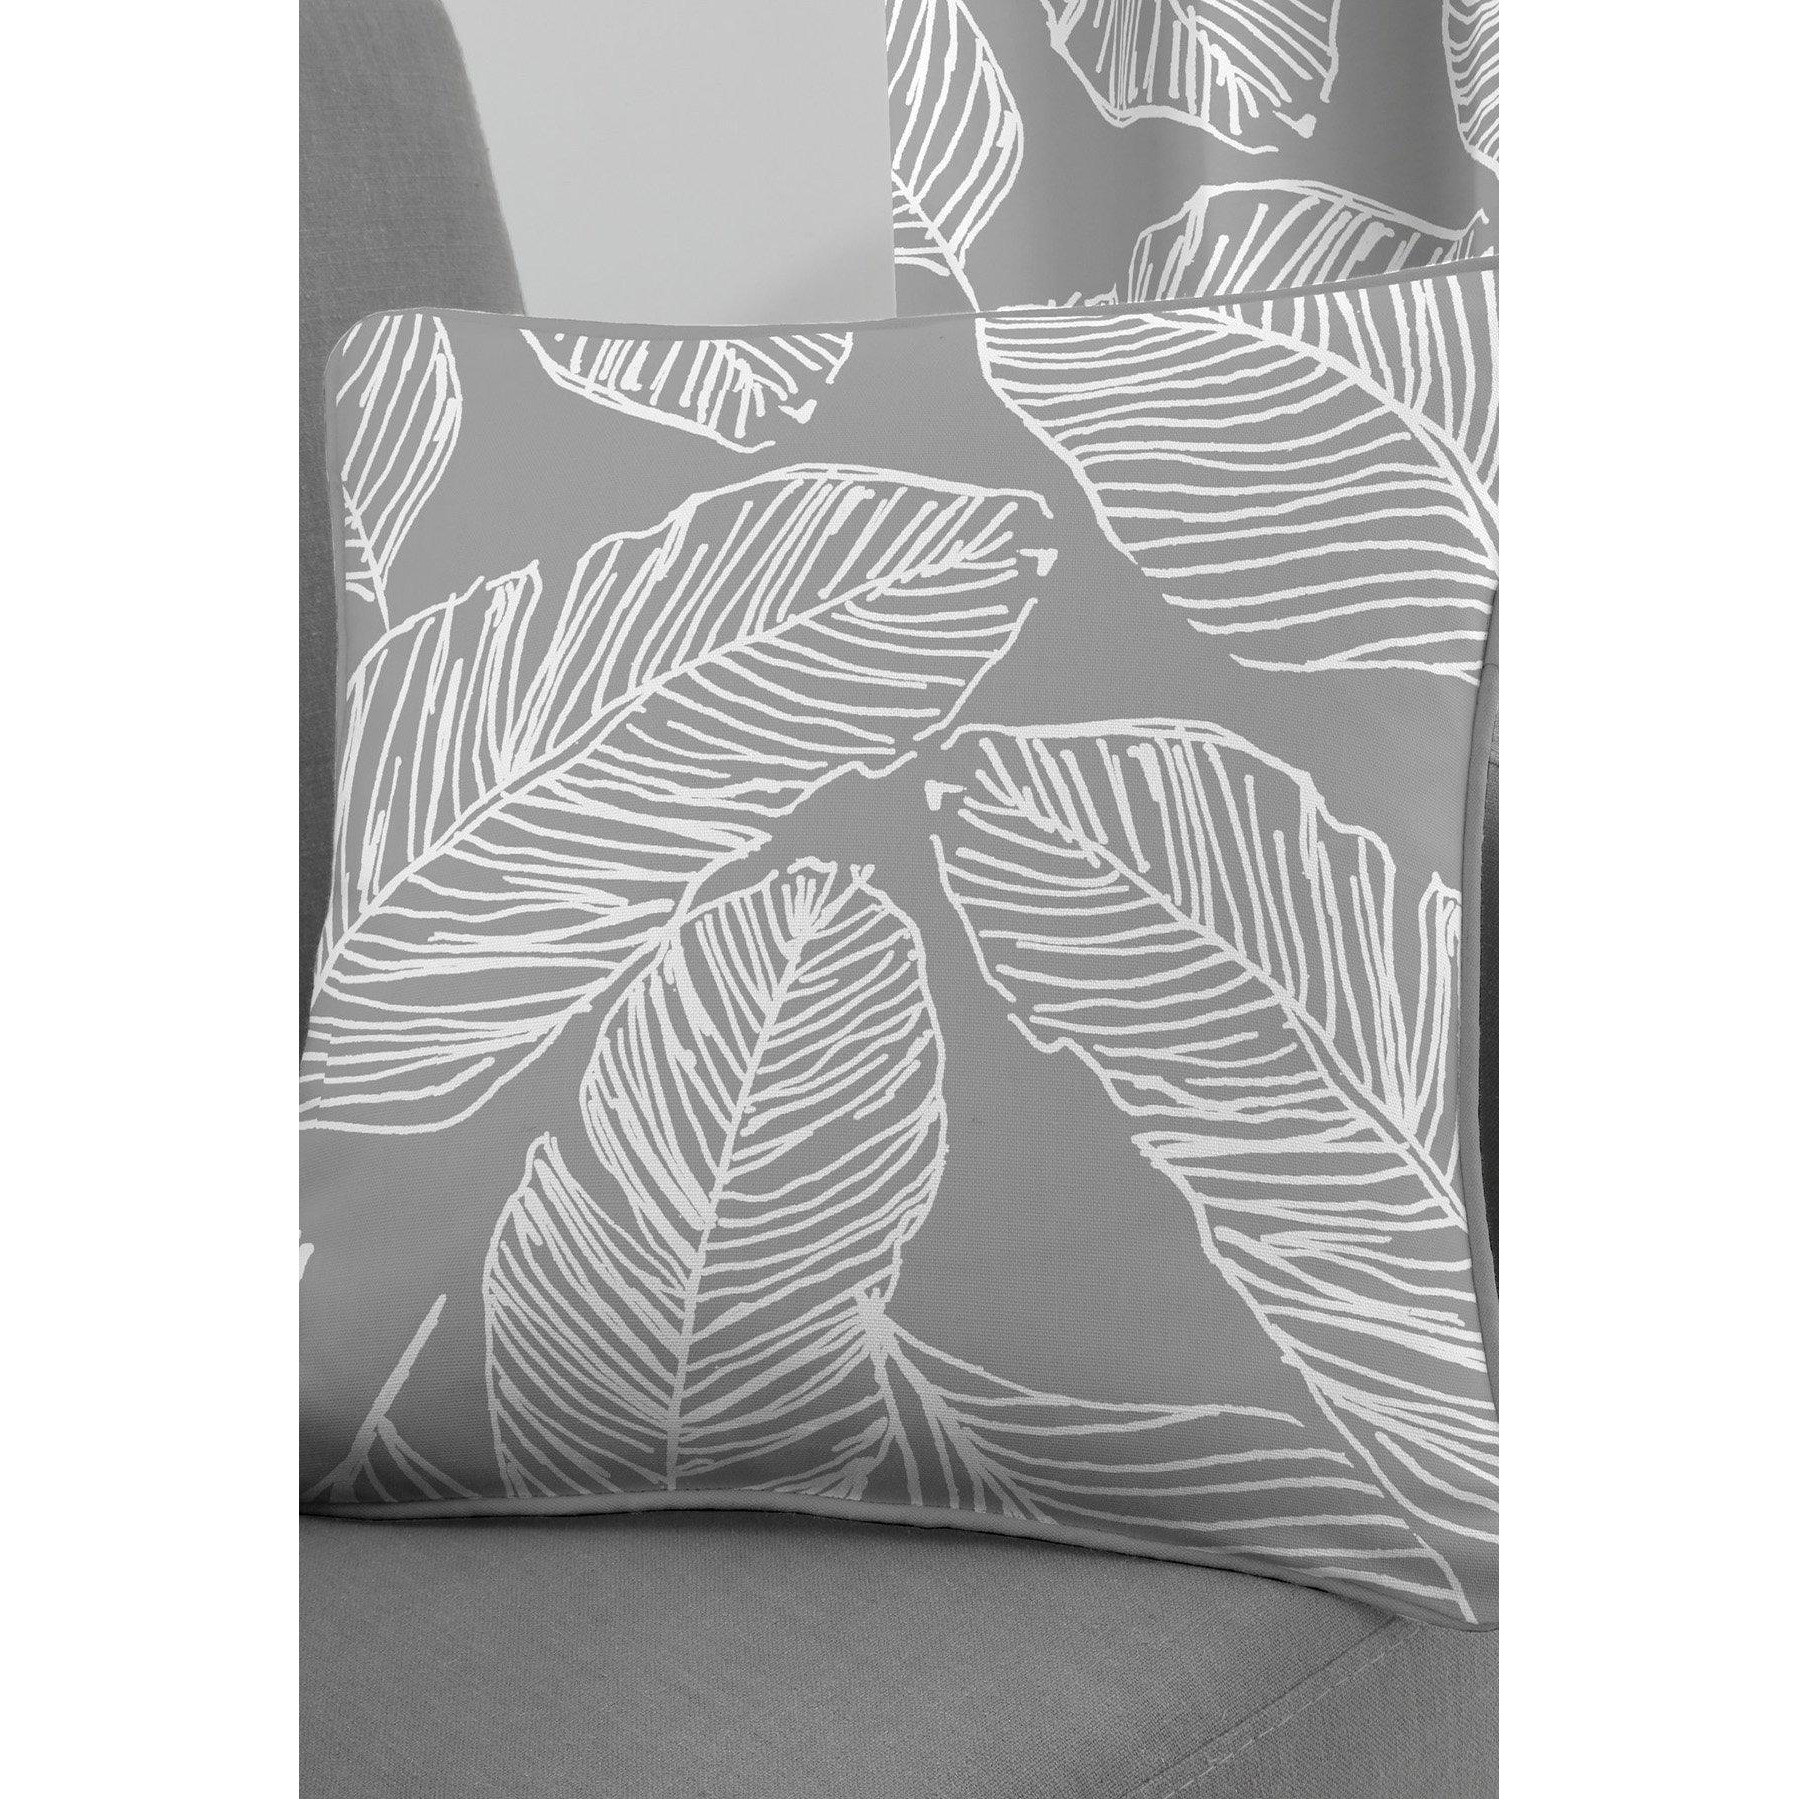 'Matteo' Hand Drawn Leaf Print Filled Cushion 100% Cotton - image 1